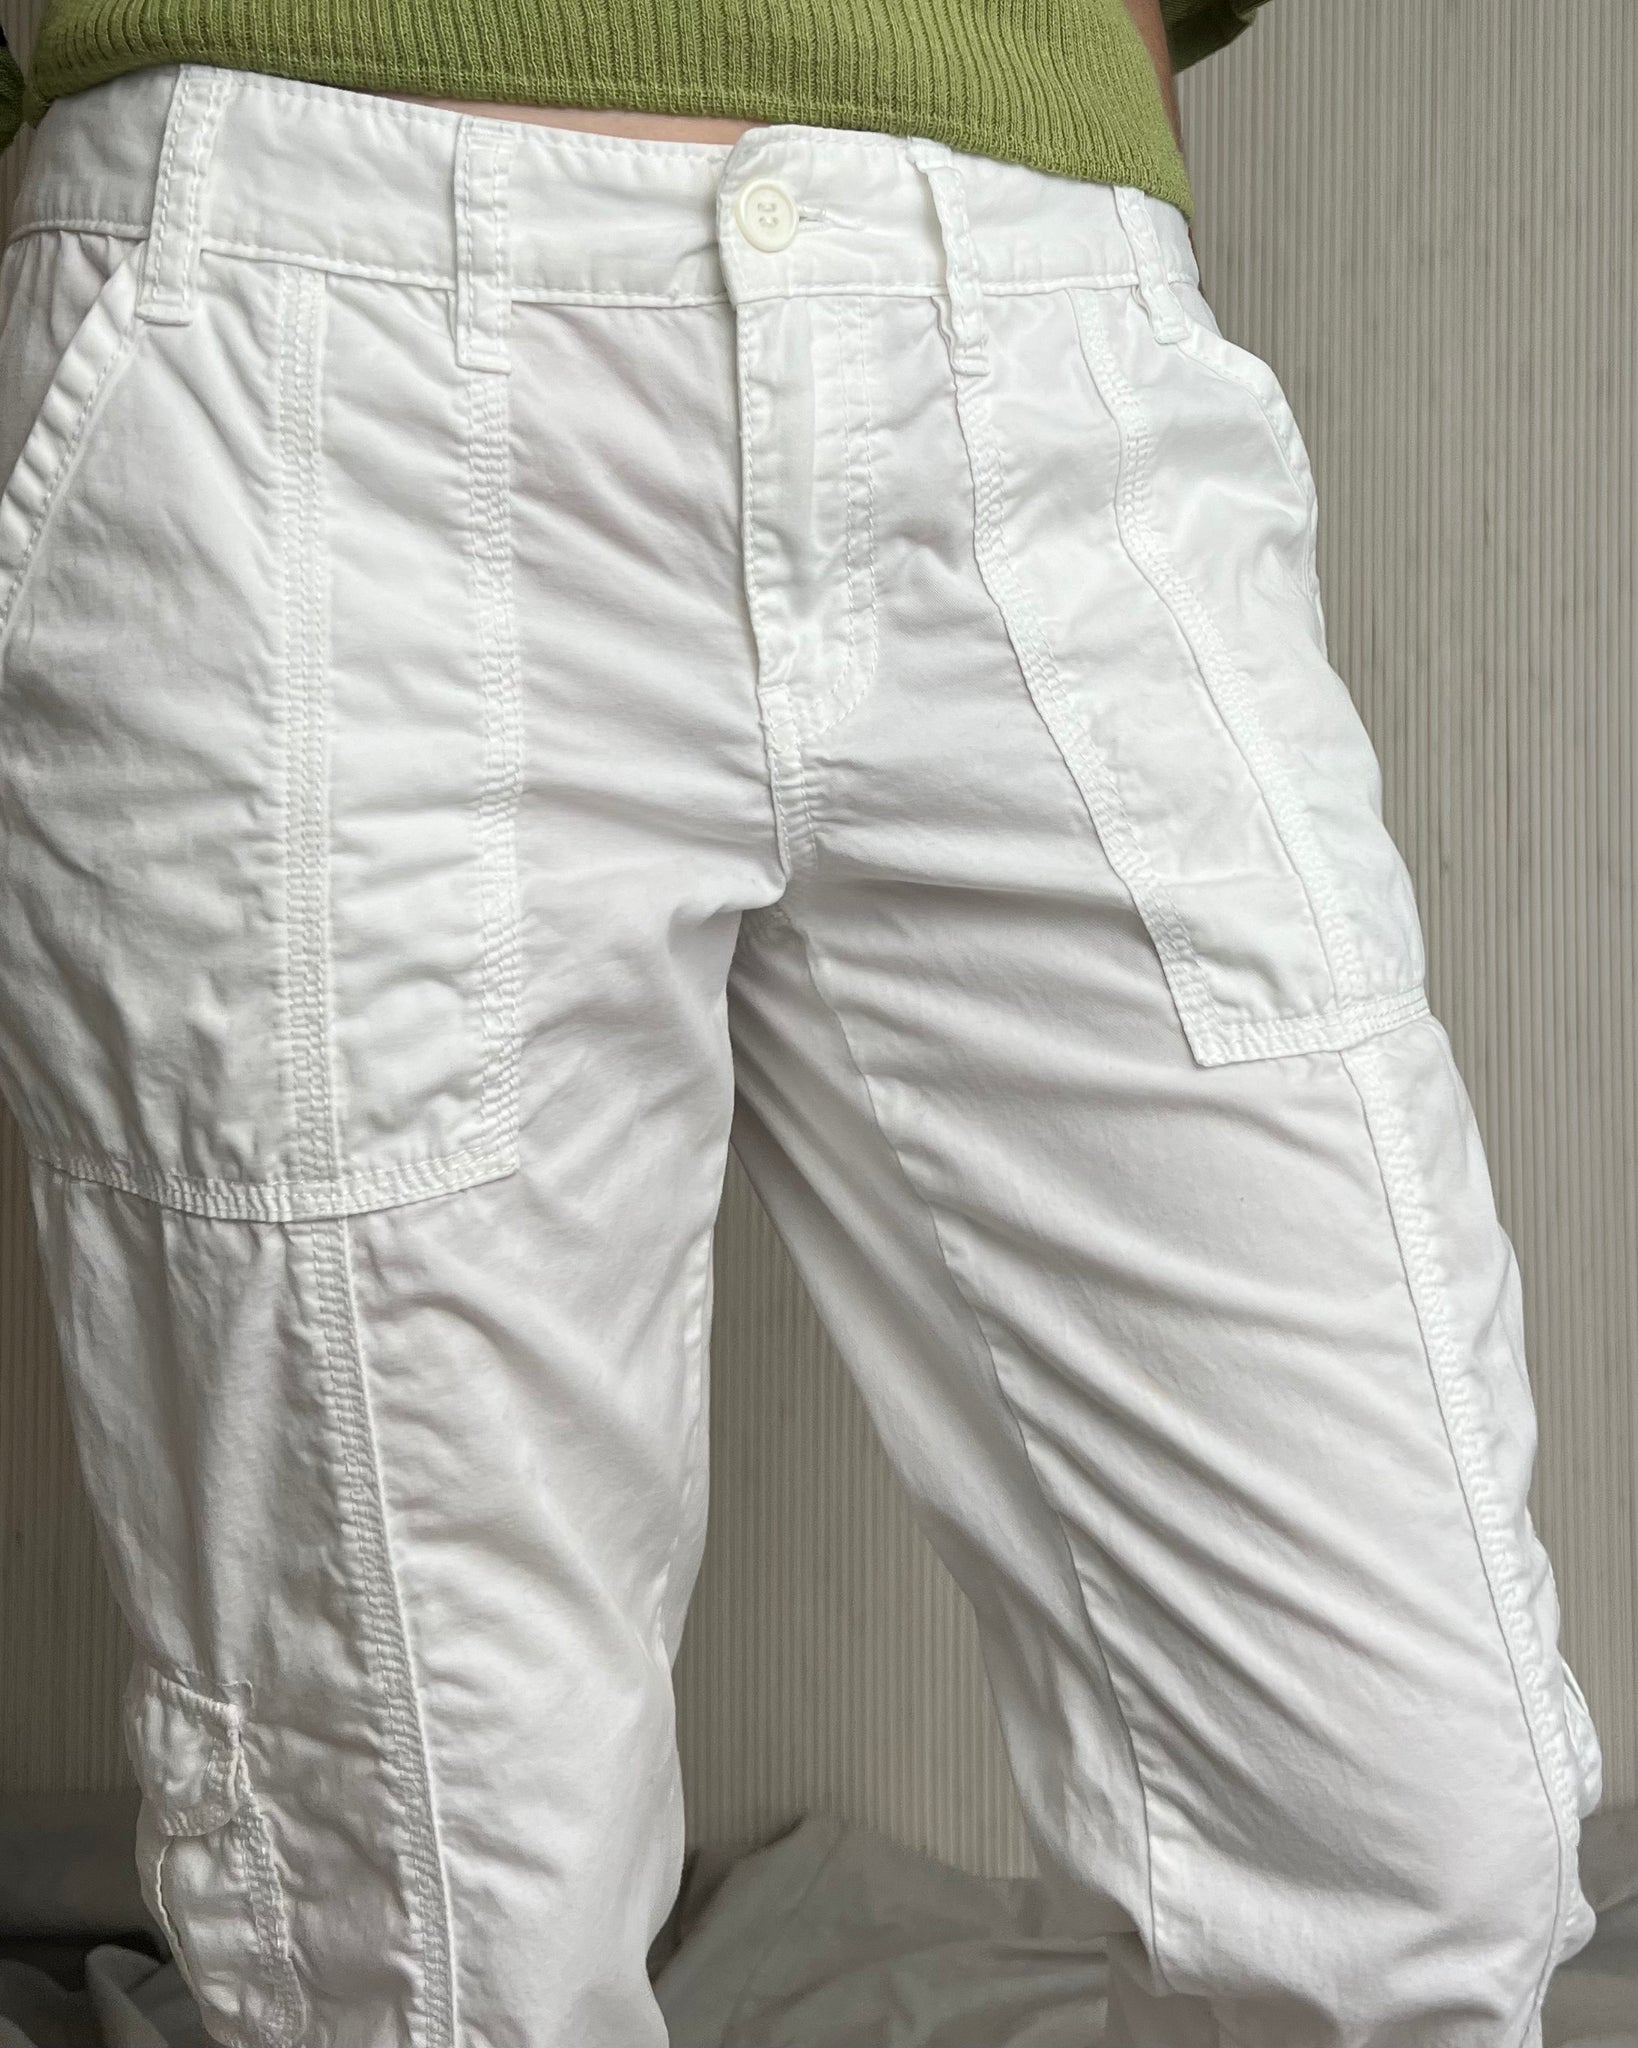 CK 100% Cotton White Cargo Pants (Fits XS-M)